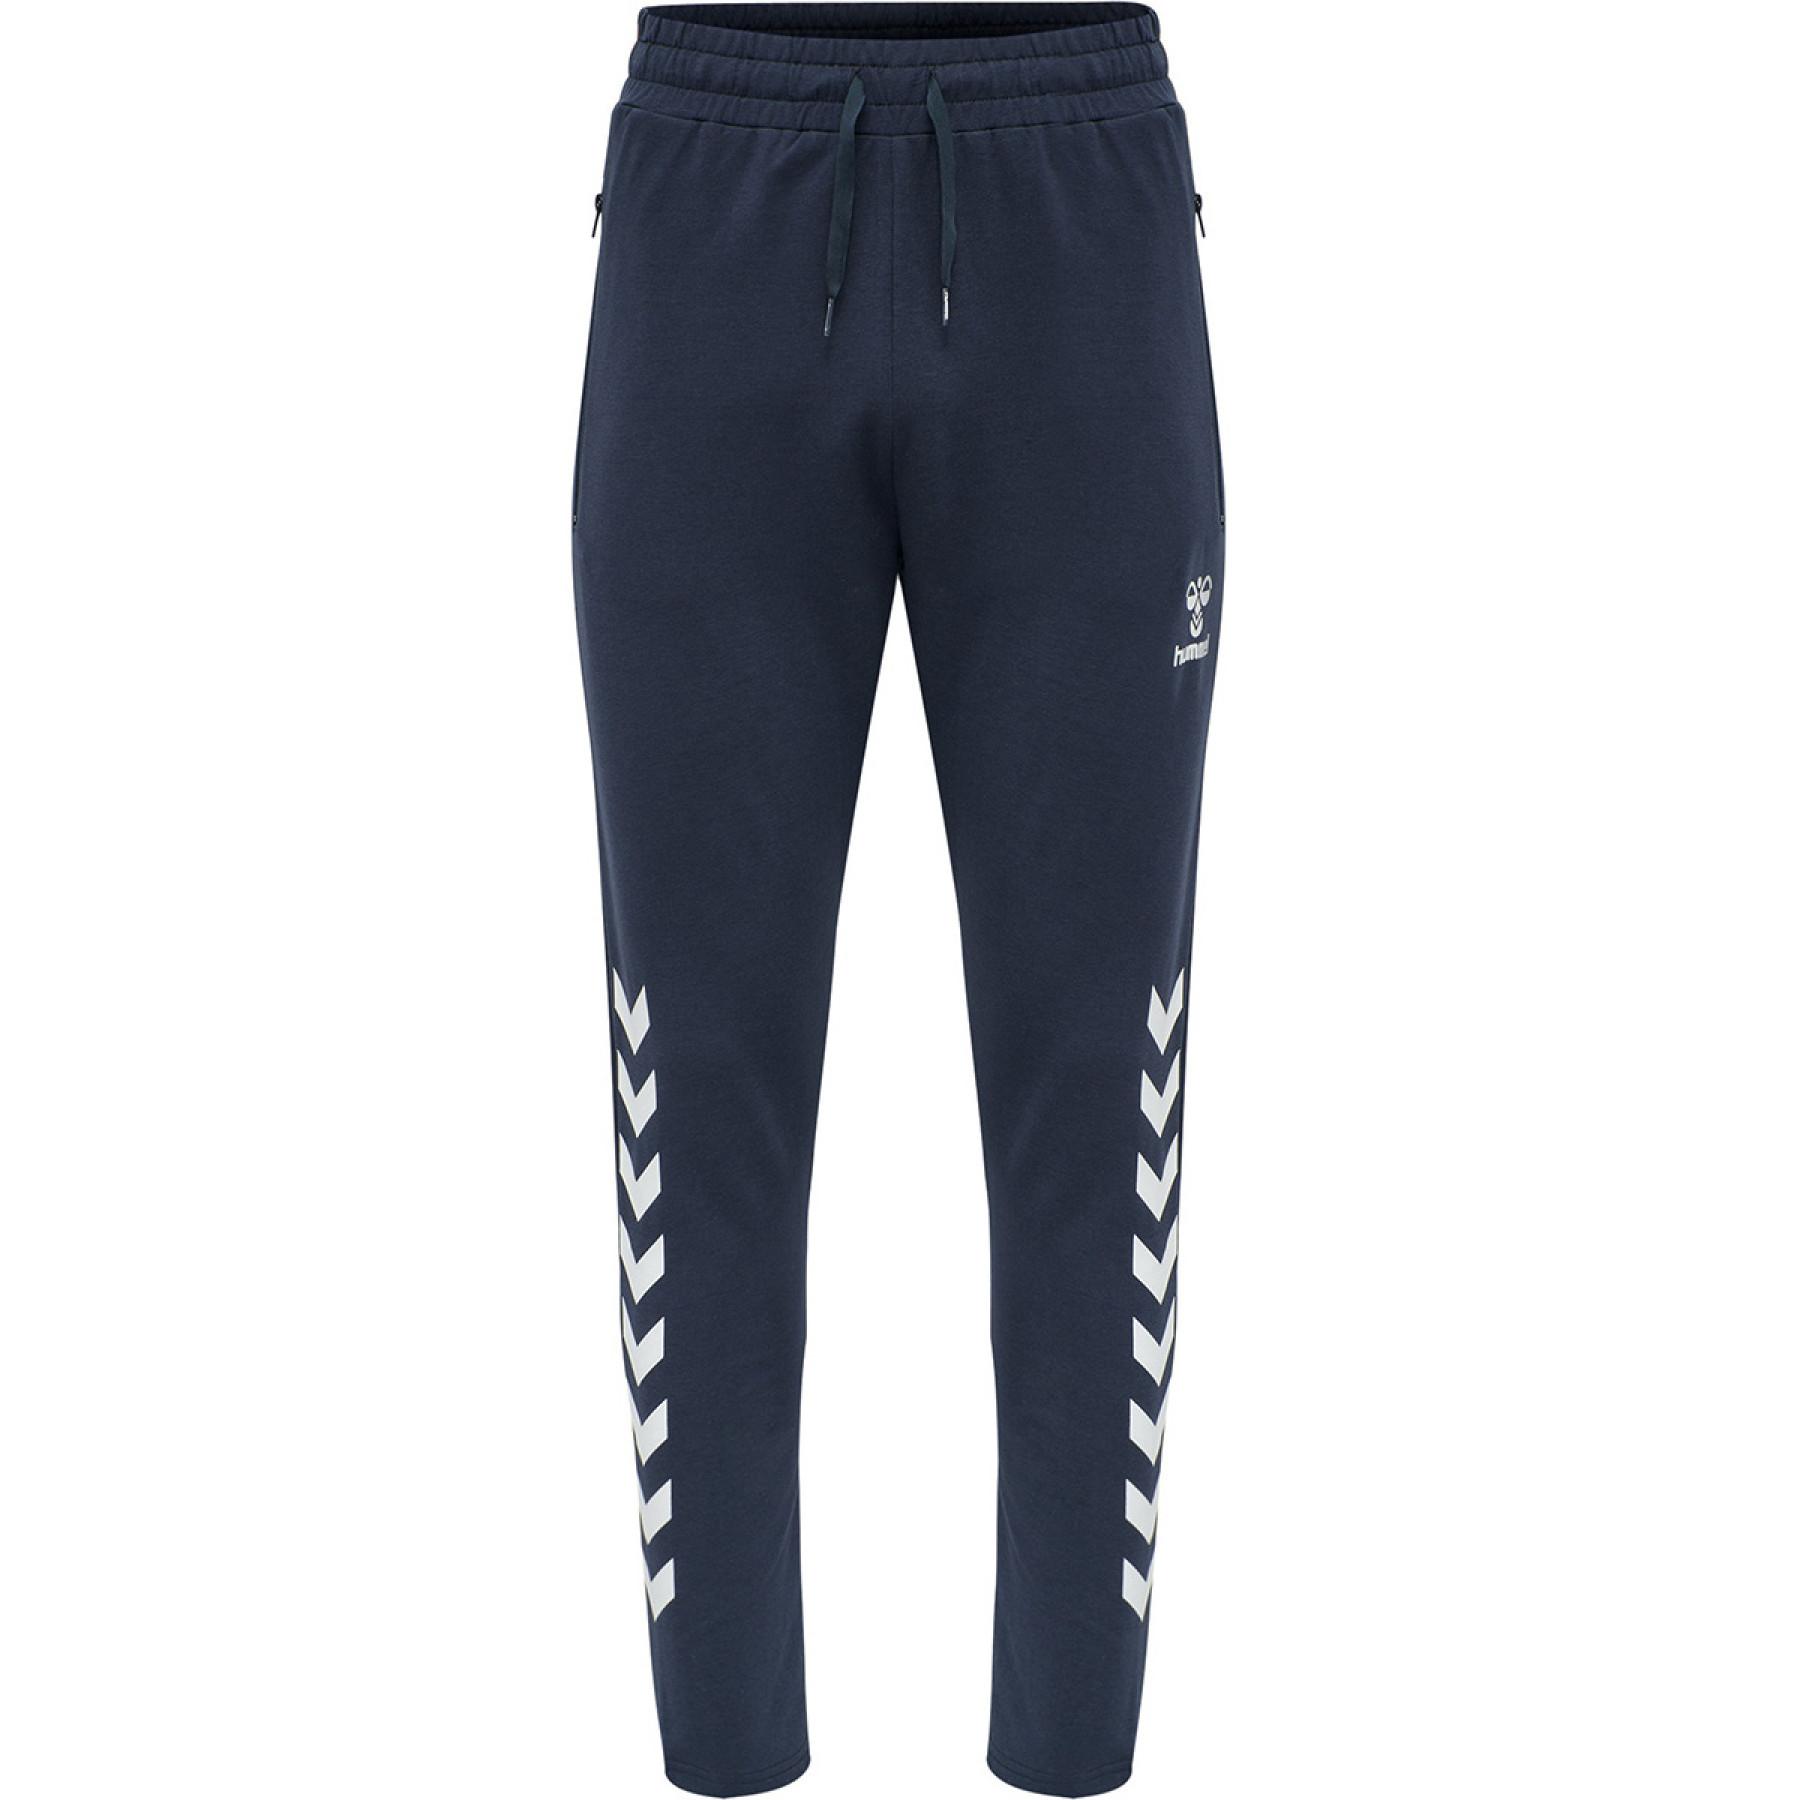 Pants Hummel 2.0 - Trousers - Categories - Basketball wear